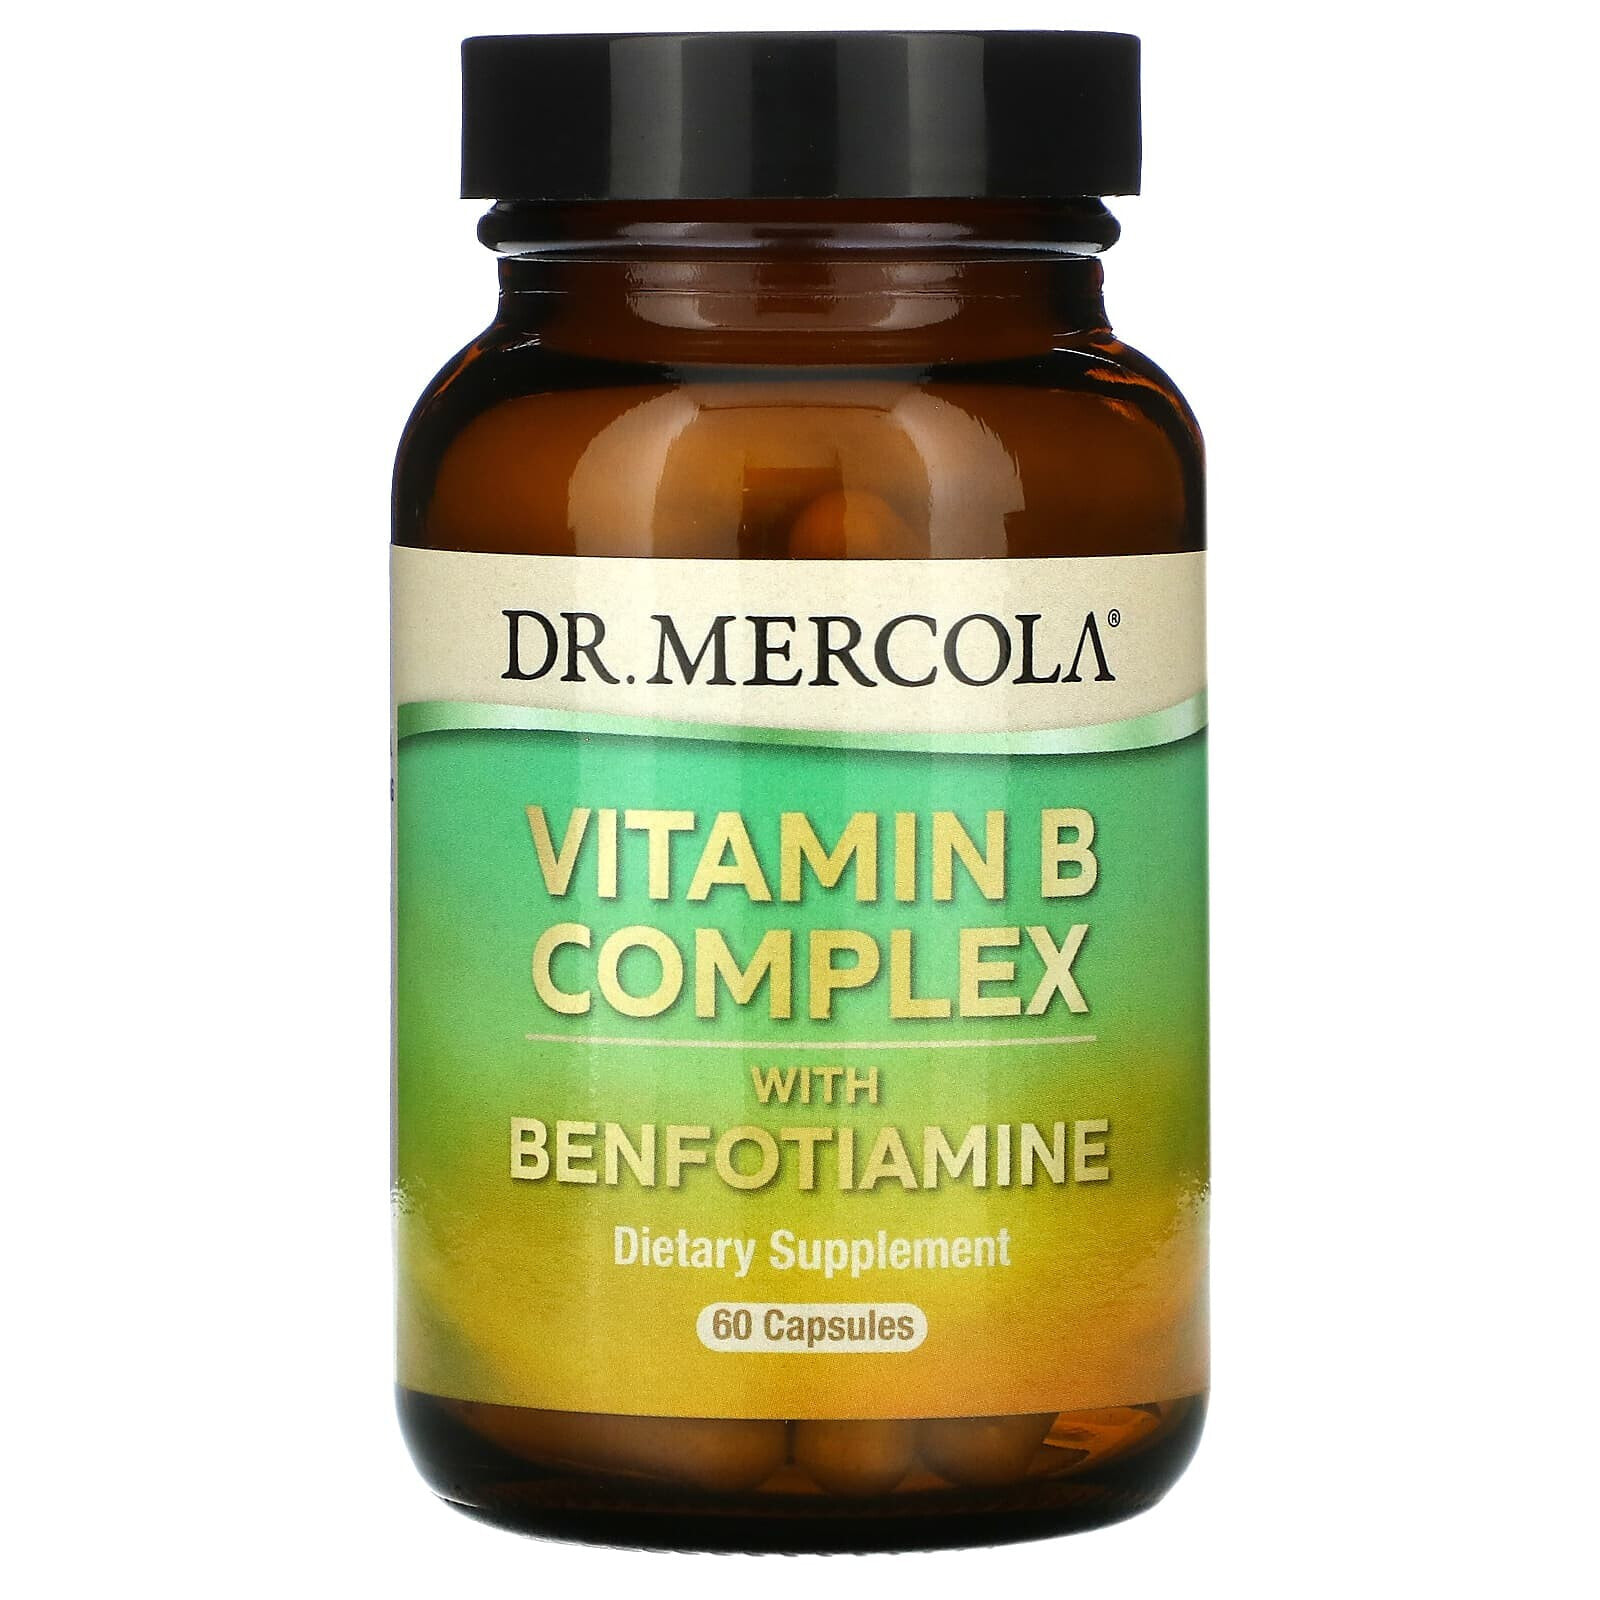 Бенфотиамин отзывы применение цена. Комплекс витаминов б. Витамин с доктор Меркола. Комплекс витаминов b в капсулах. Витамин д Mercola.